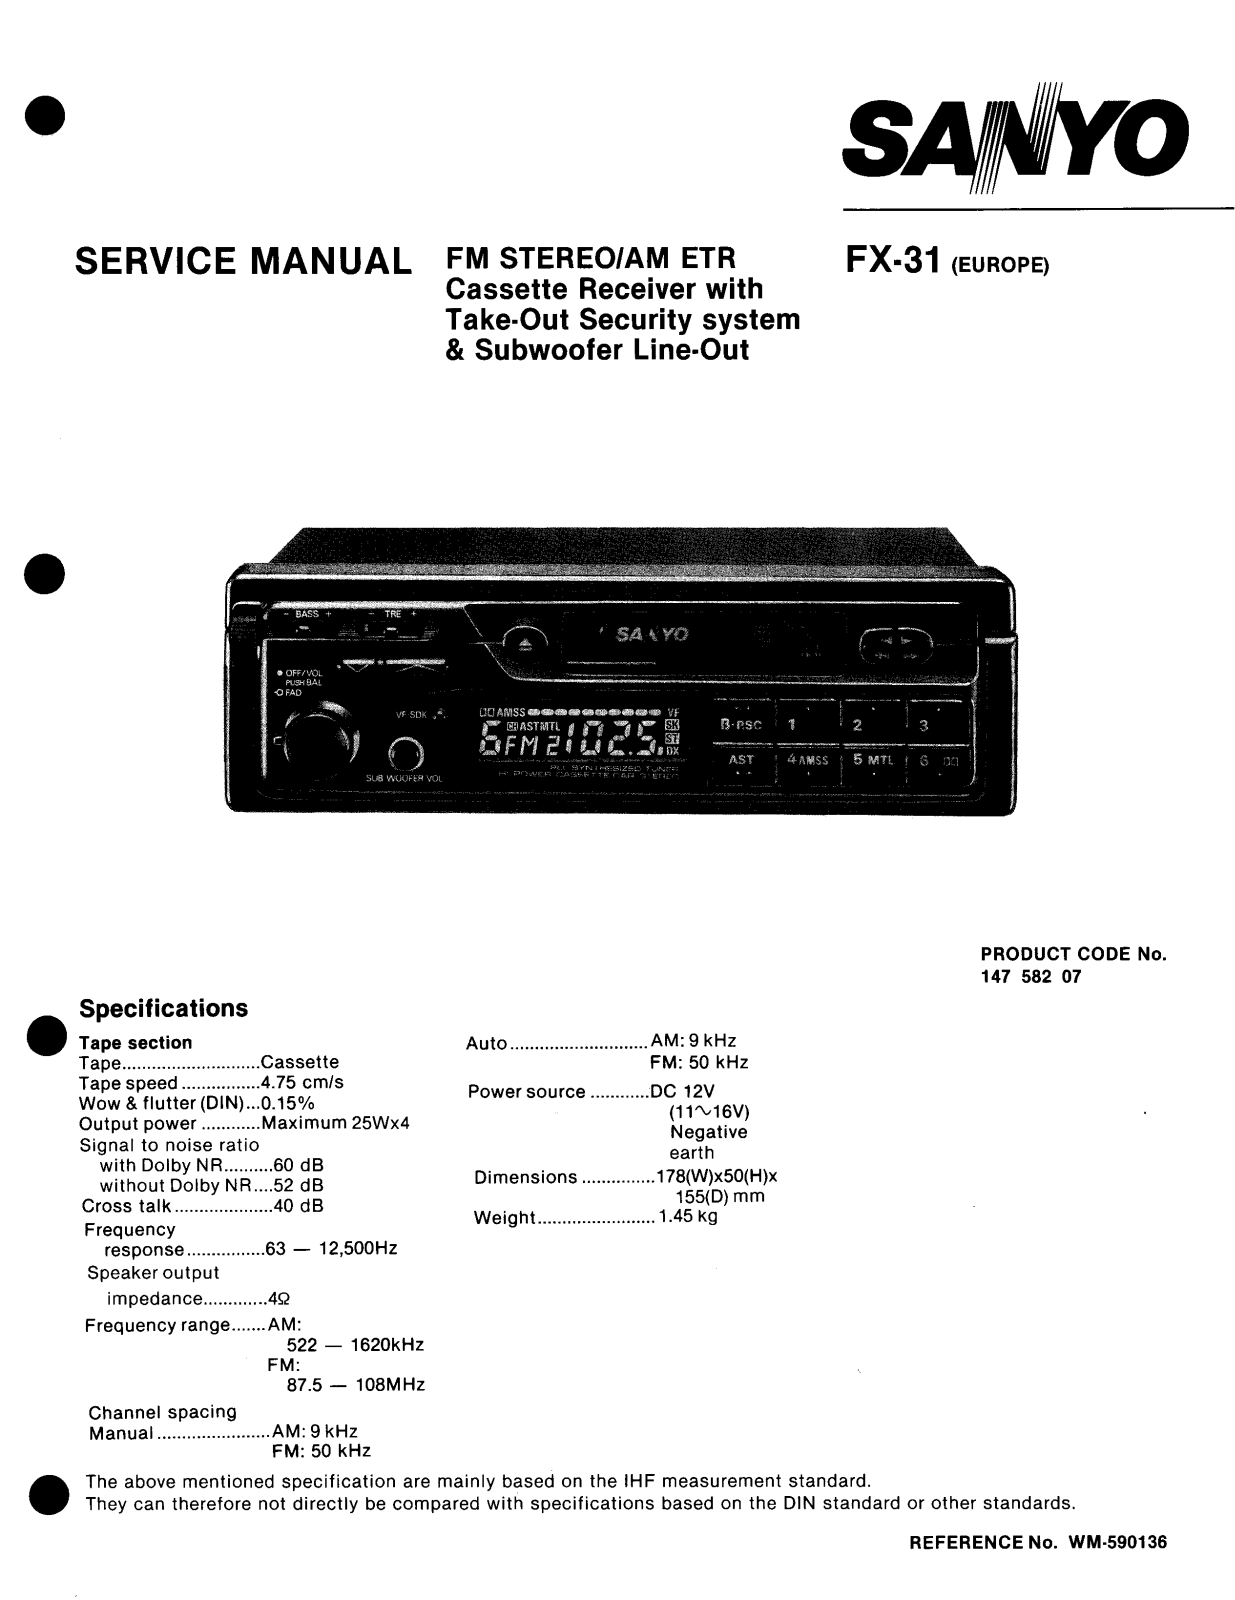 Sanyo FX-31 Service Manual